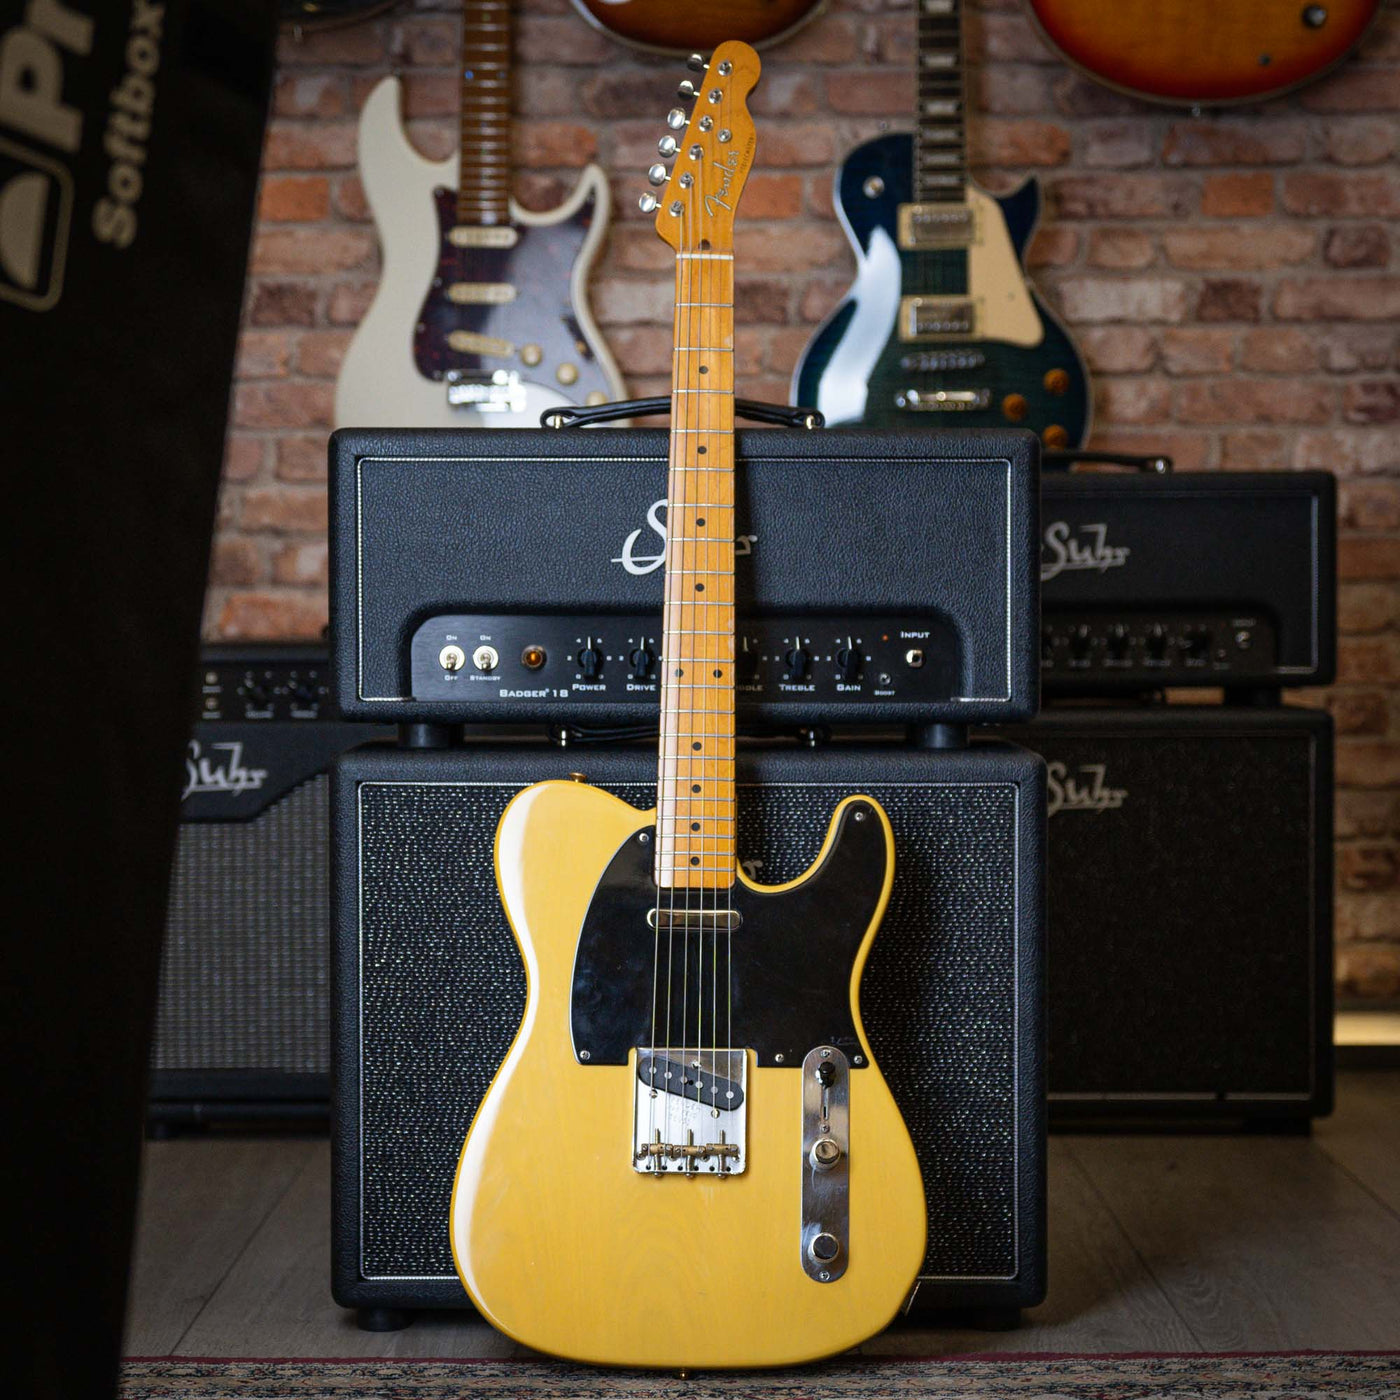 Fender Telecaster RI'52 Butterscotch Blonde MIJ '89